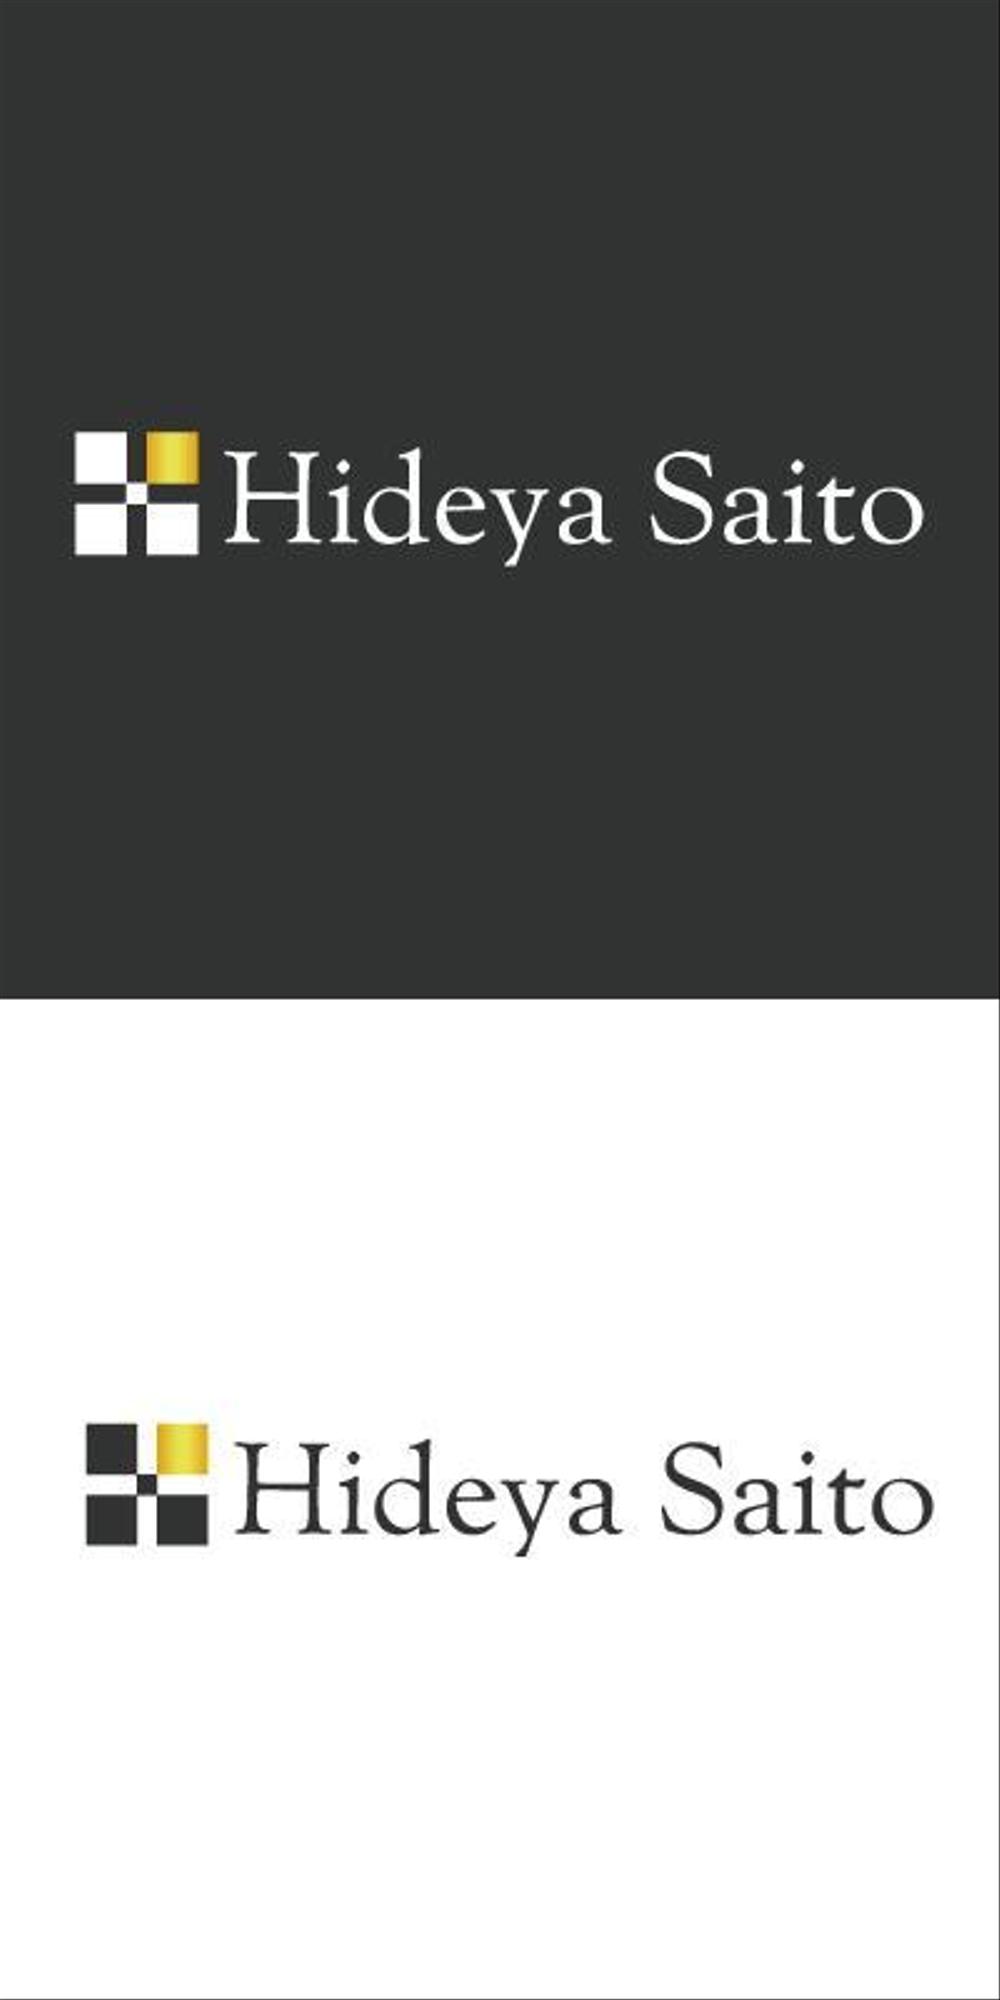 HIDEYASAITO02.jpg